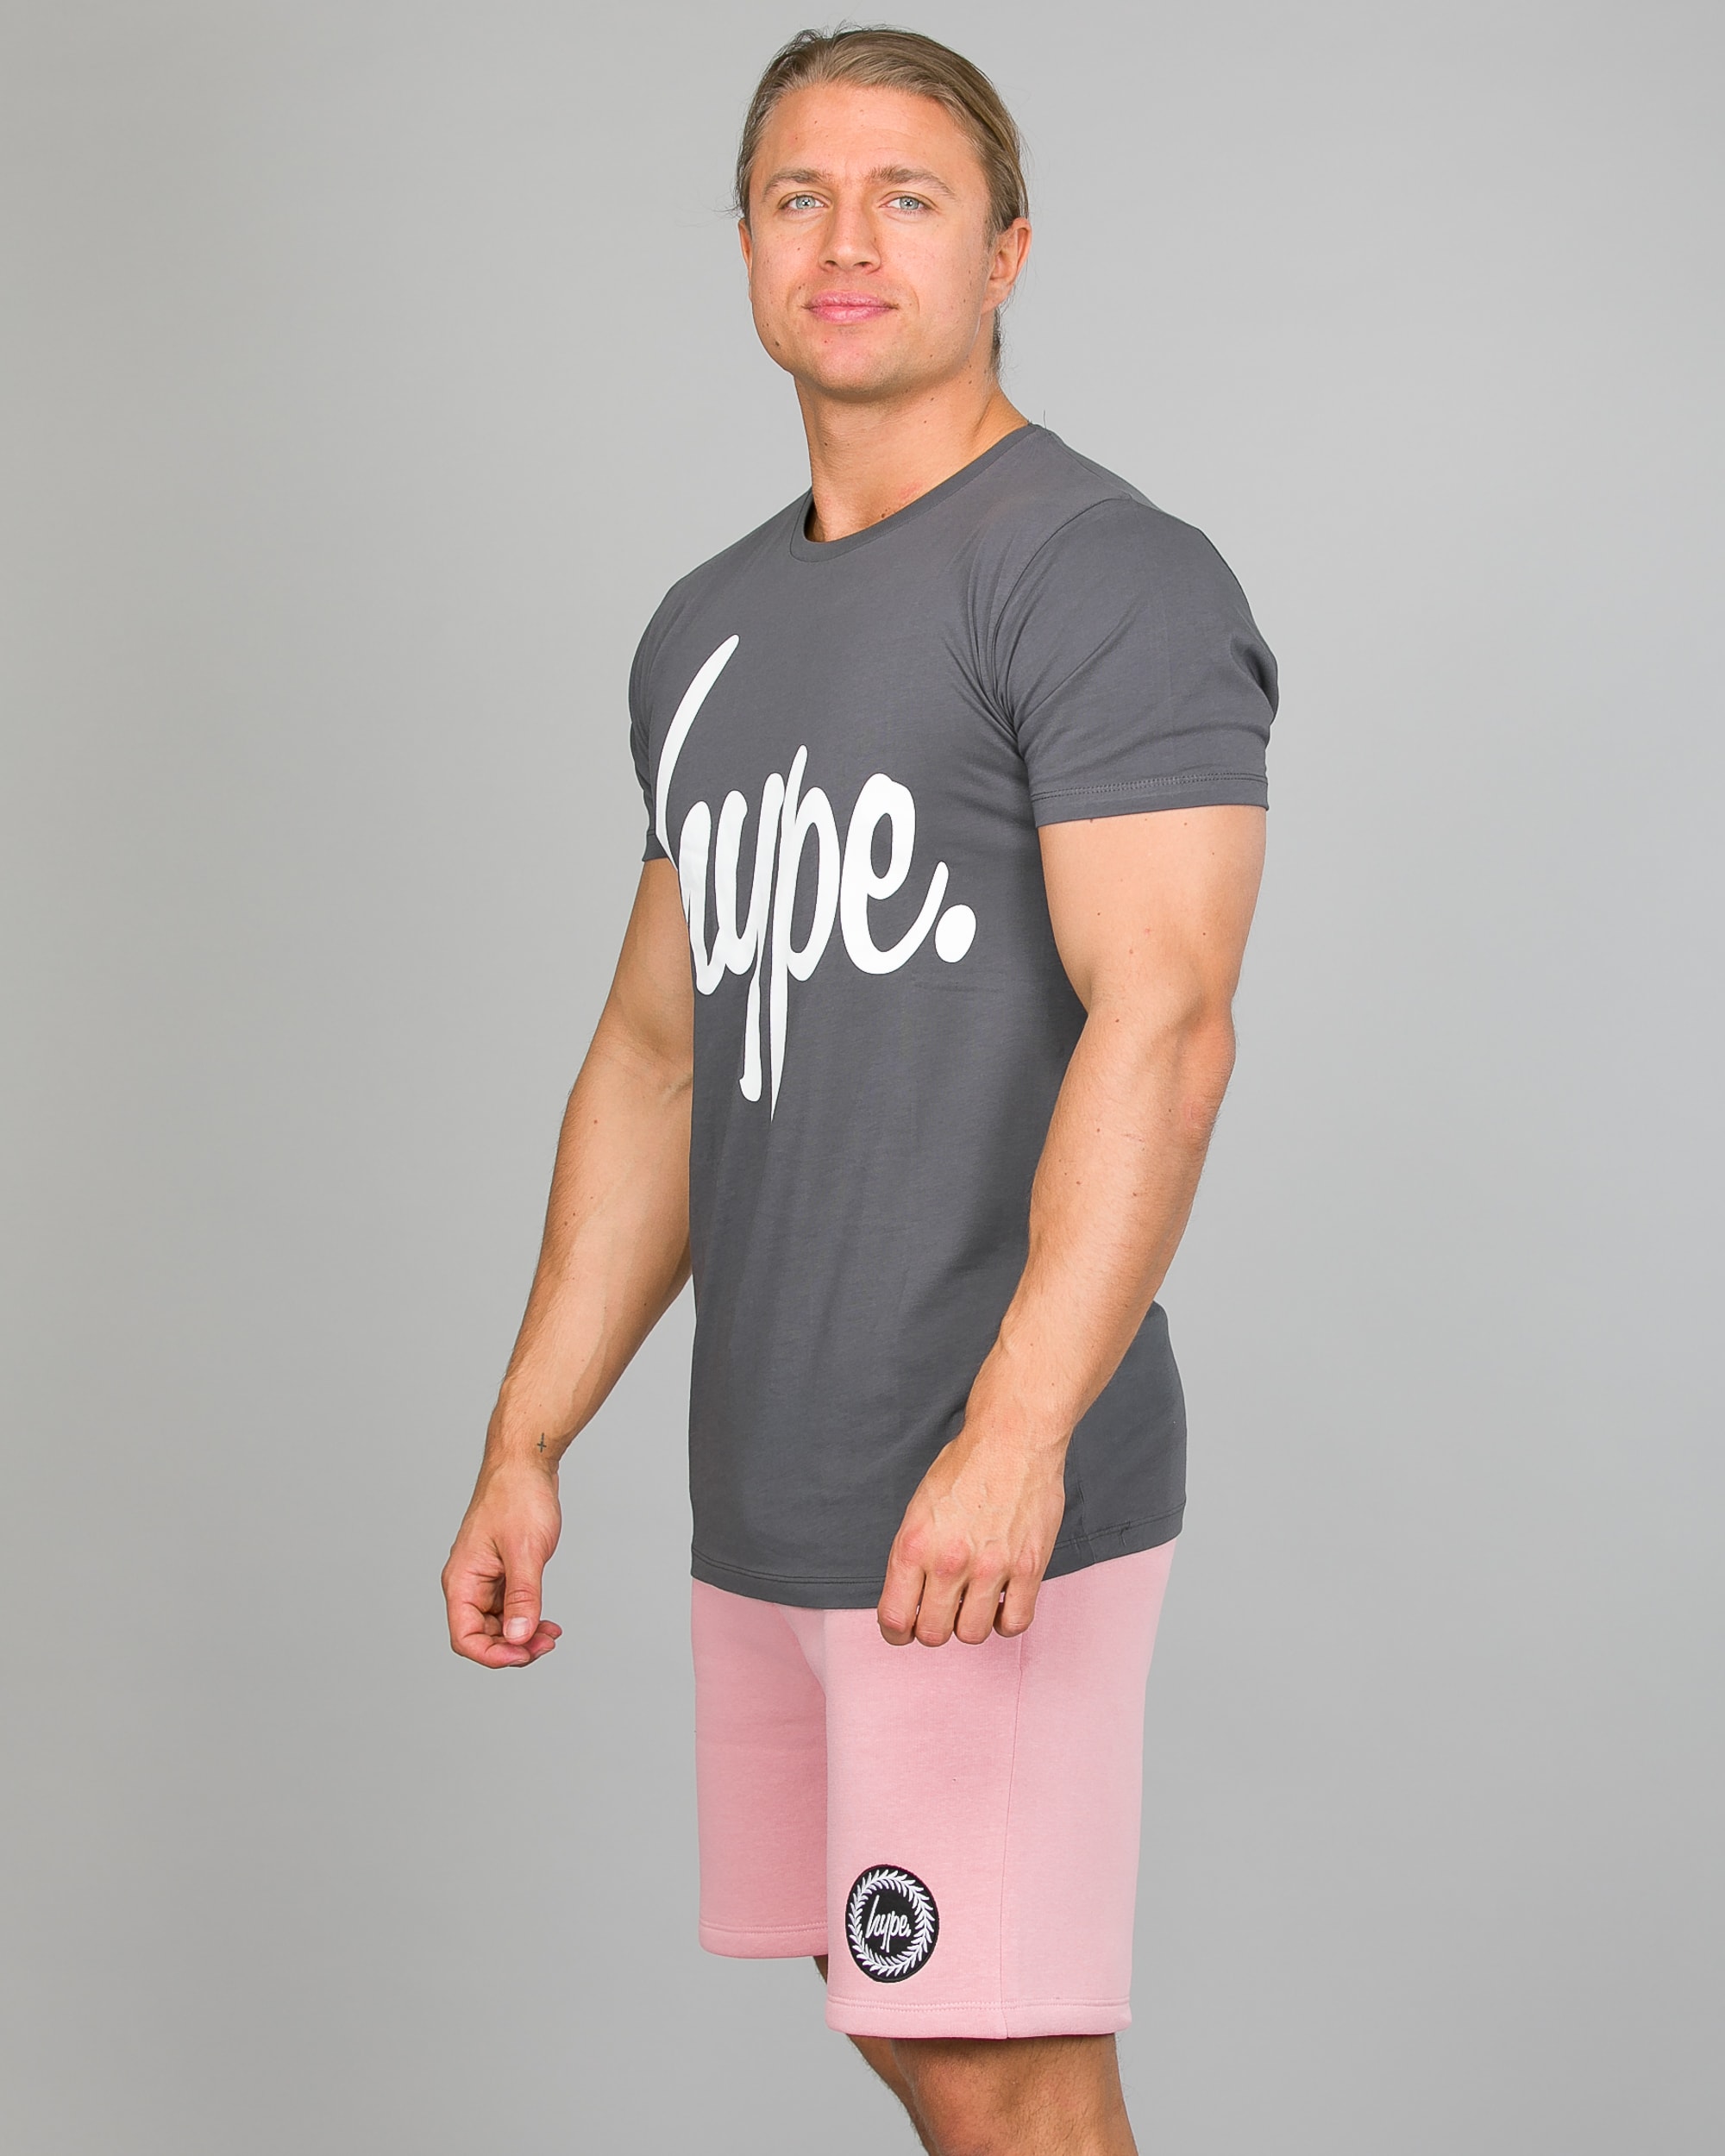 Hype Script T-Shirt Men ss18005 charcoal and Crest Shorts ss18330 Pink b